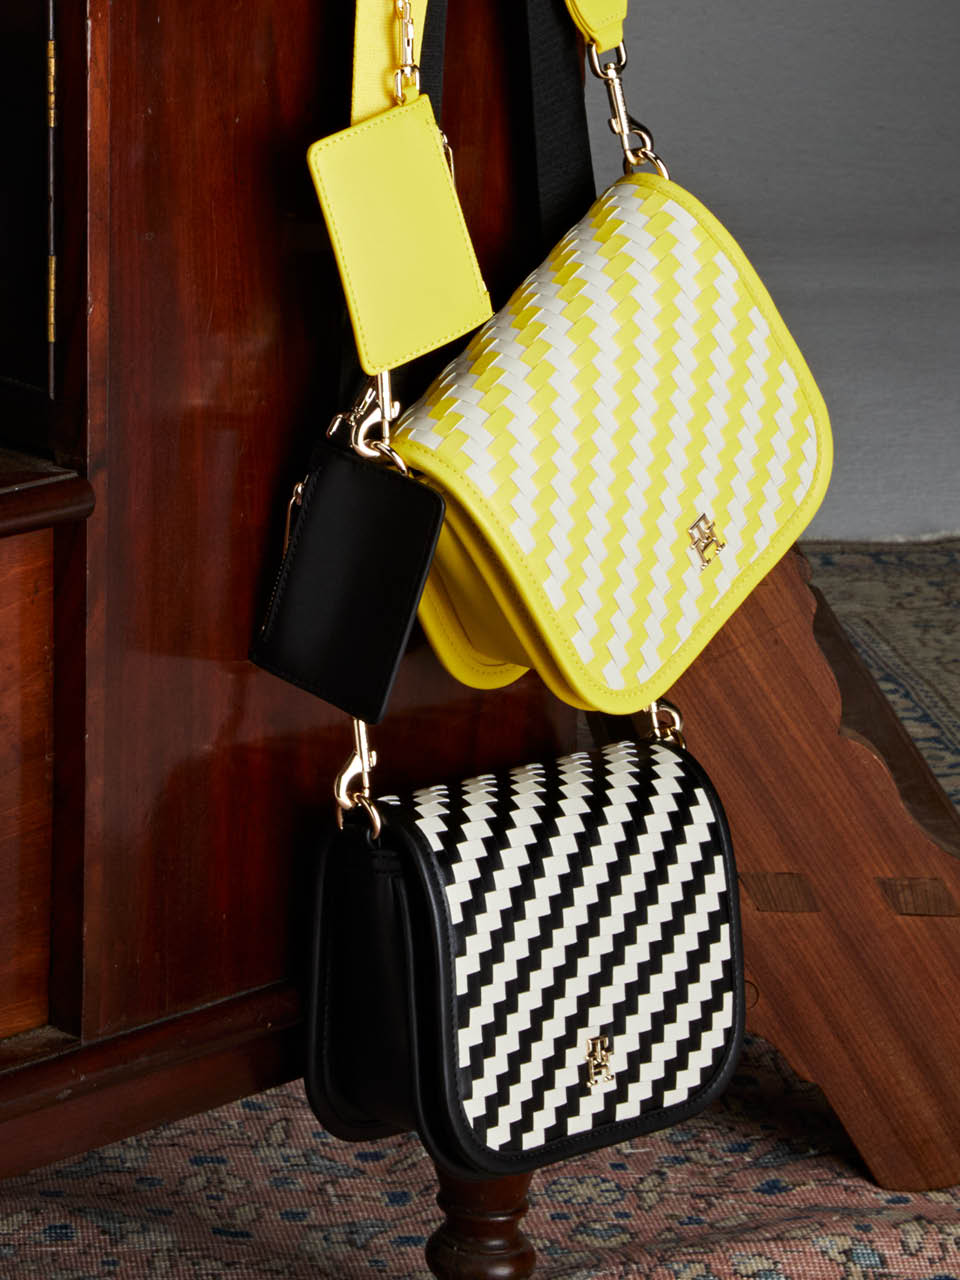 Designer Womens Bowknot Handbags Satchel Shoulder Bags Female Casual Tote  Bag : Amazon.in: Shoes & Handbags